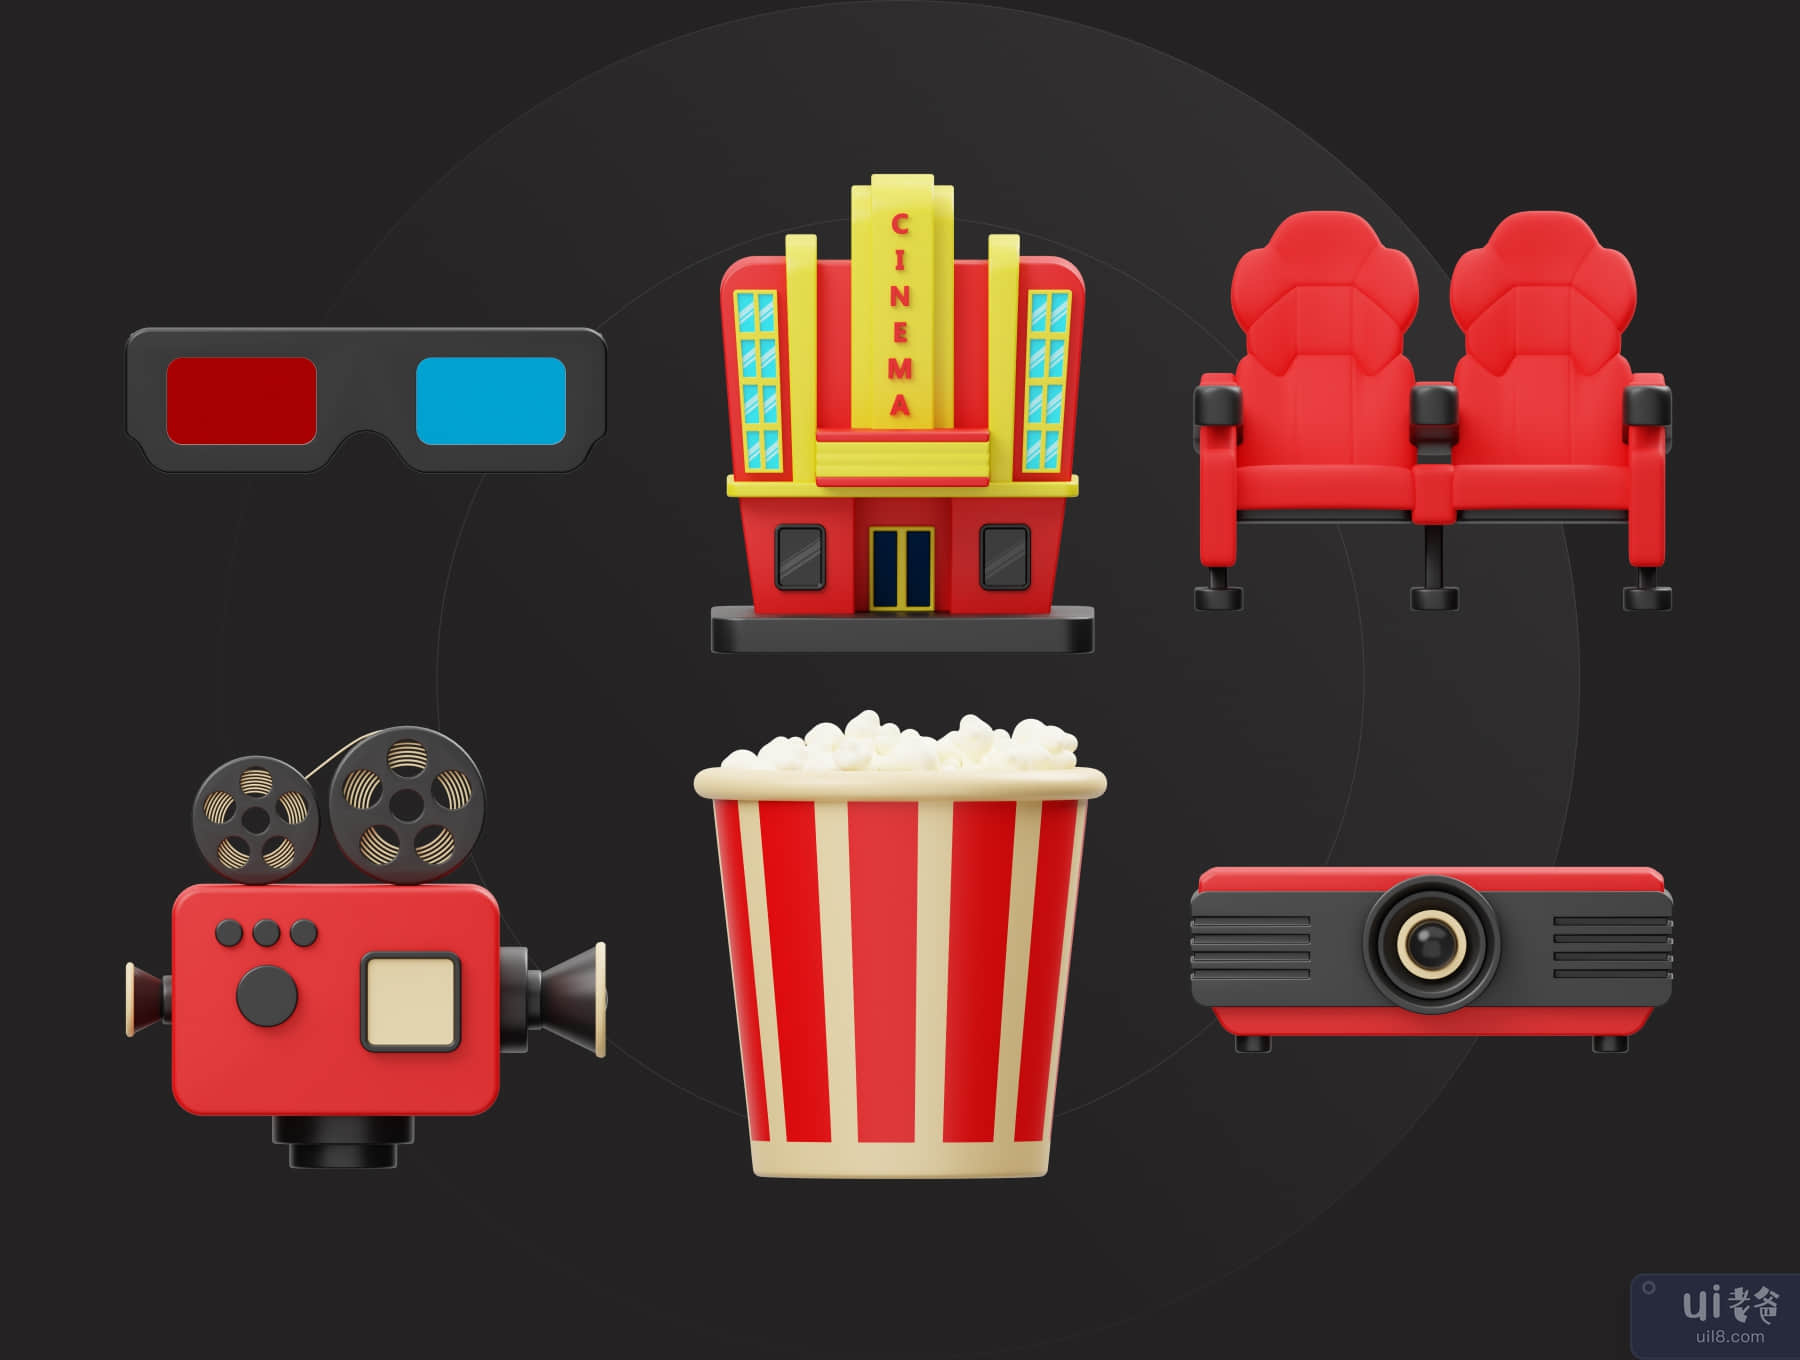 电影院和电影 3D 图标 (Cinema and Movie 3D Icon)插图1